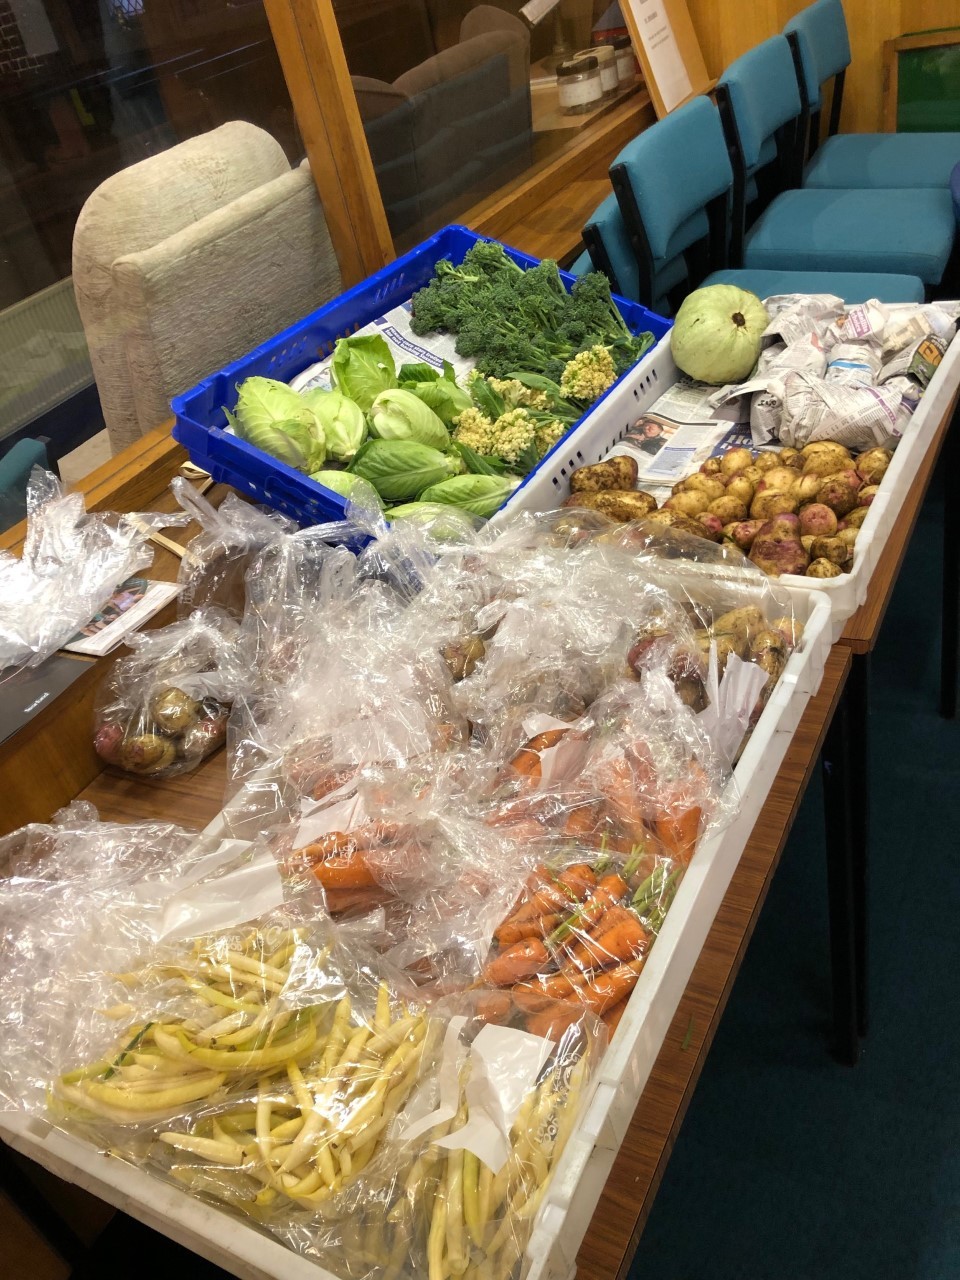 The veg harvest in church